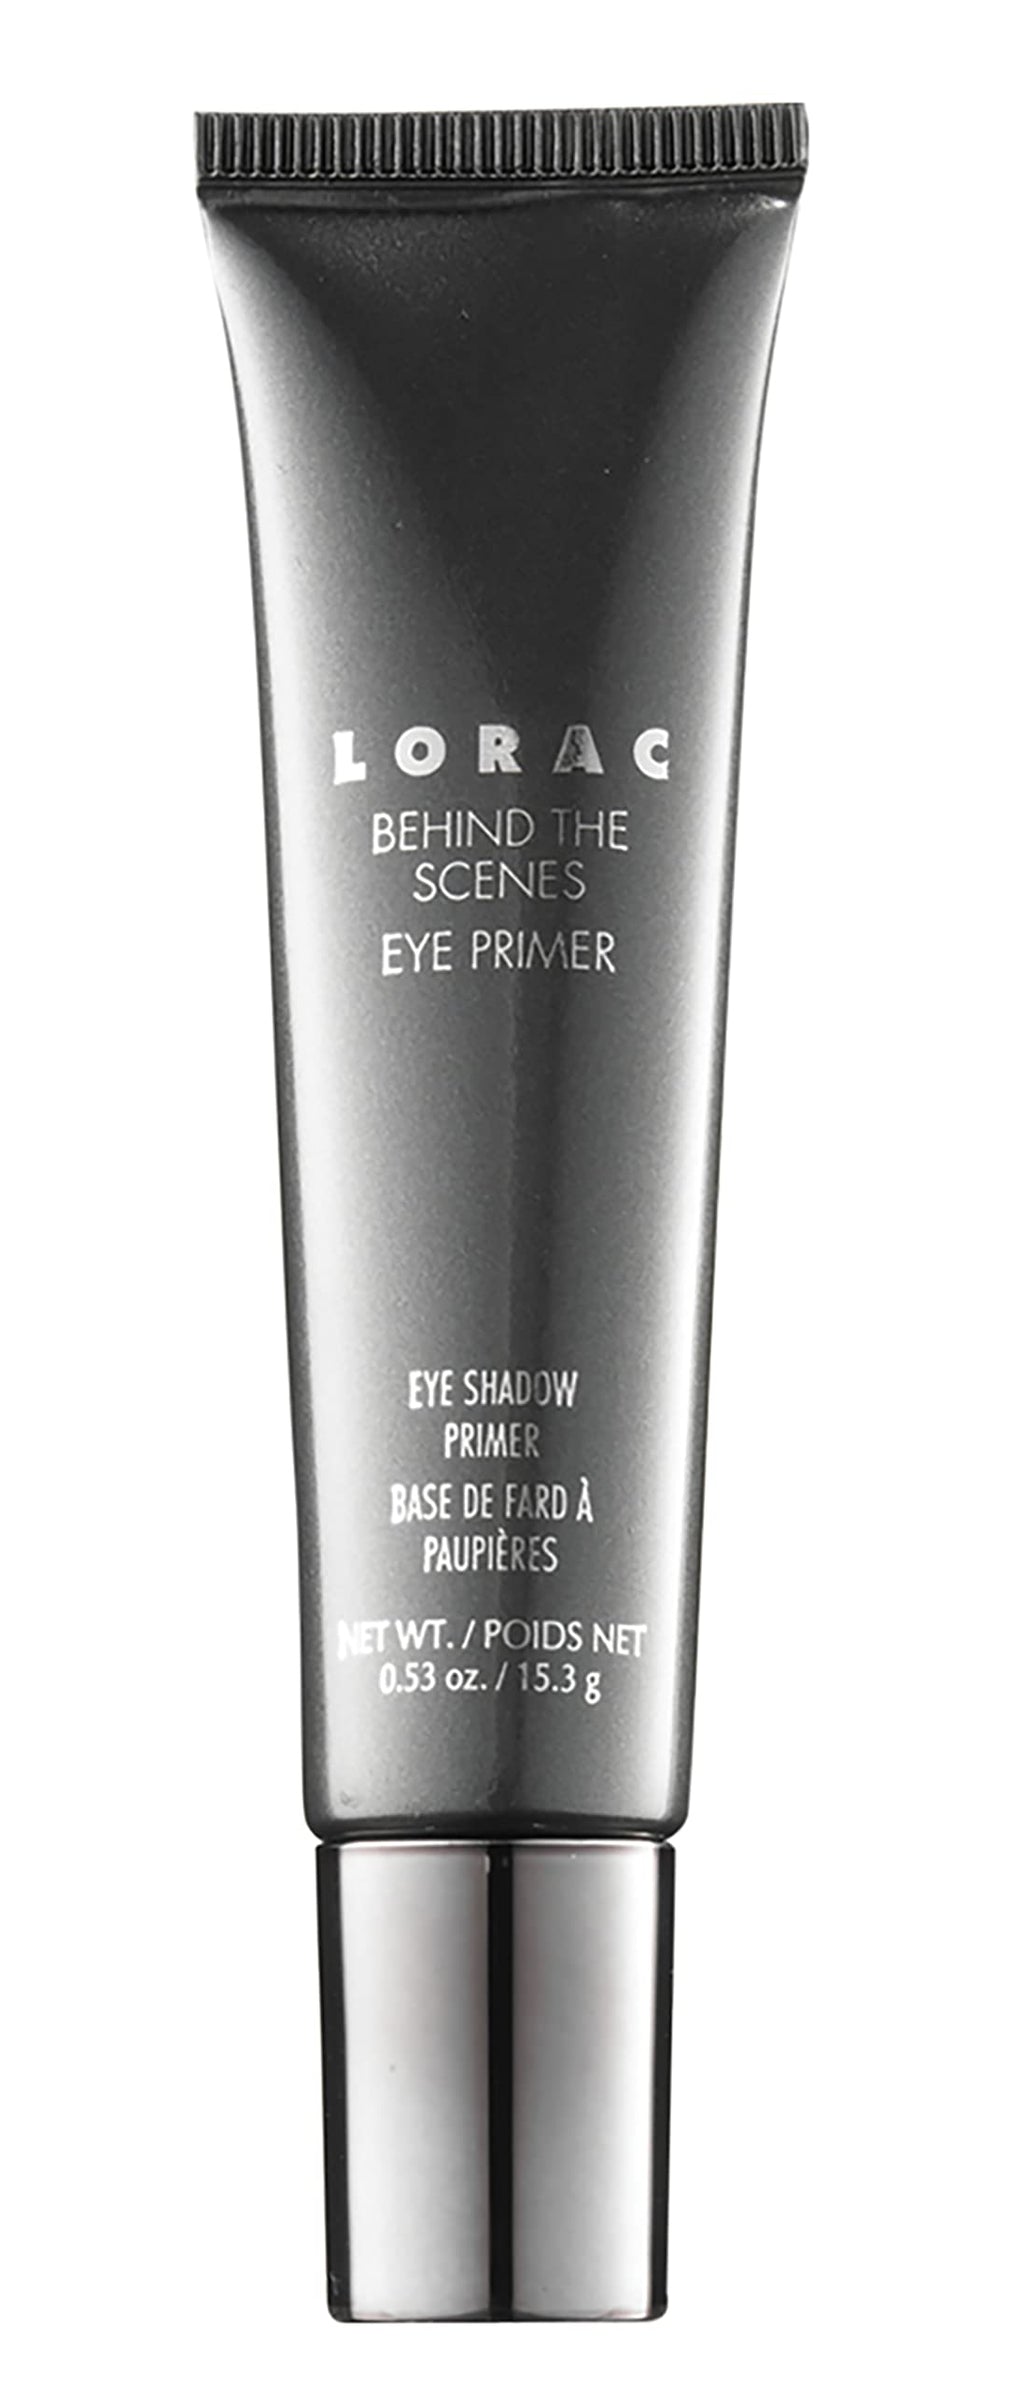 [Australia] - LORAC, Behind the Scenes Eye Primer, Lighweight Formula, Make Up Eye Primer for a Professional Make Up, For All Skin Types, Cruelty Free 